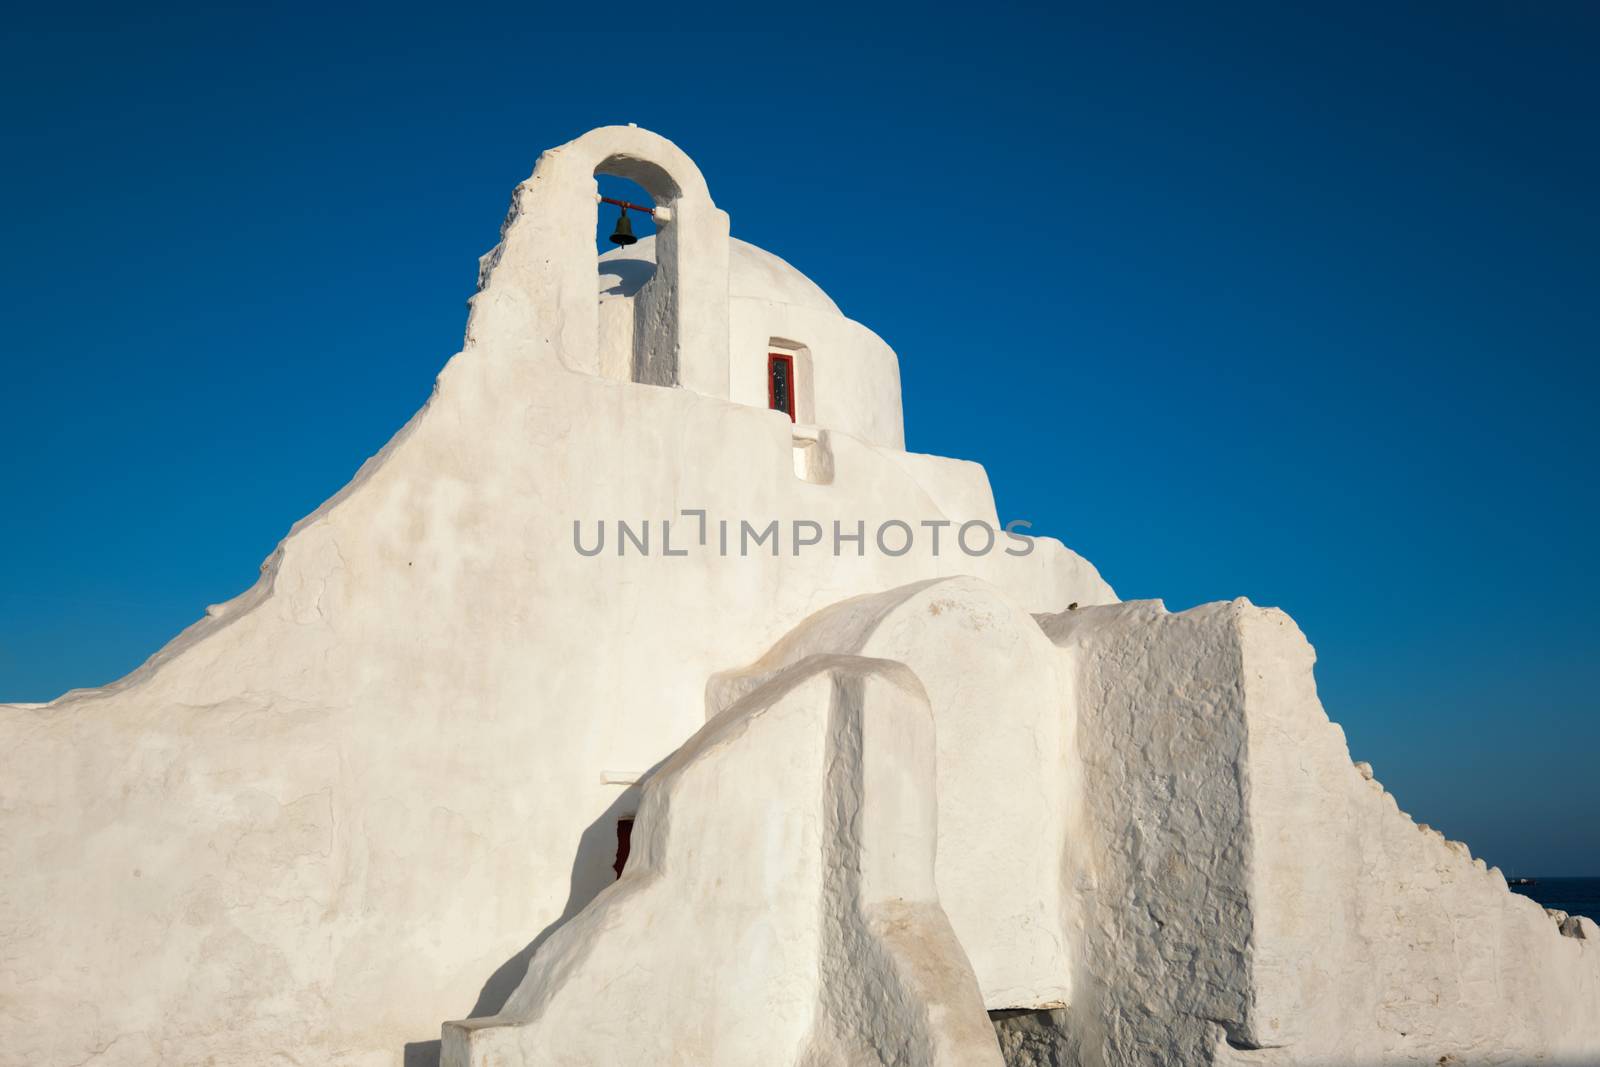 Famous tourist landmark of Greece - Greek Orthodox Church of Panagia Paraportiani in town of Chora on Mykonos island, Greece on sunrise